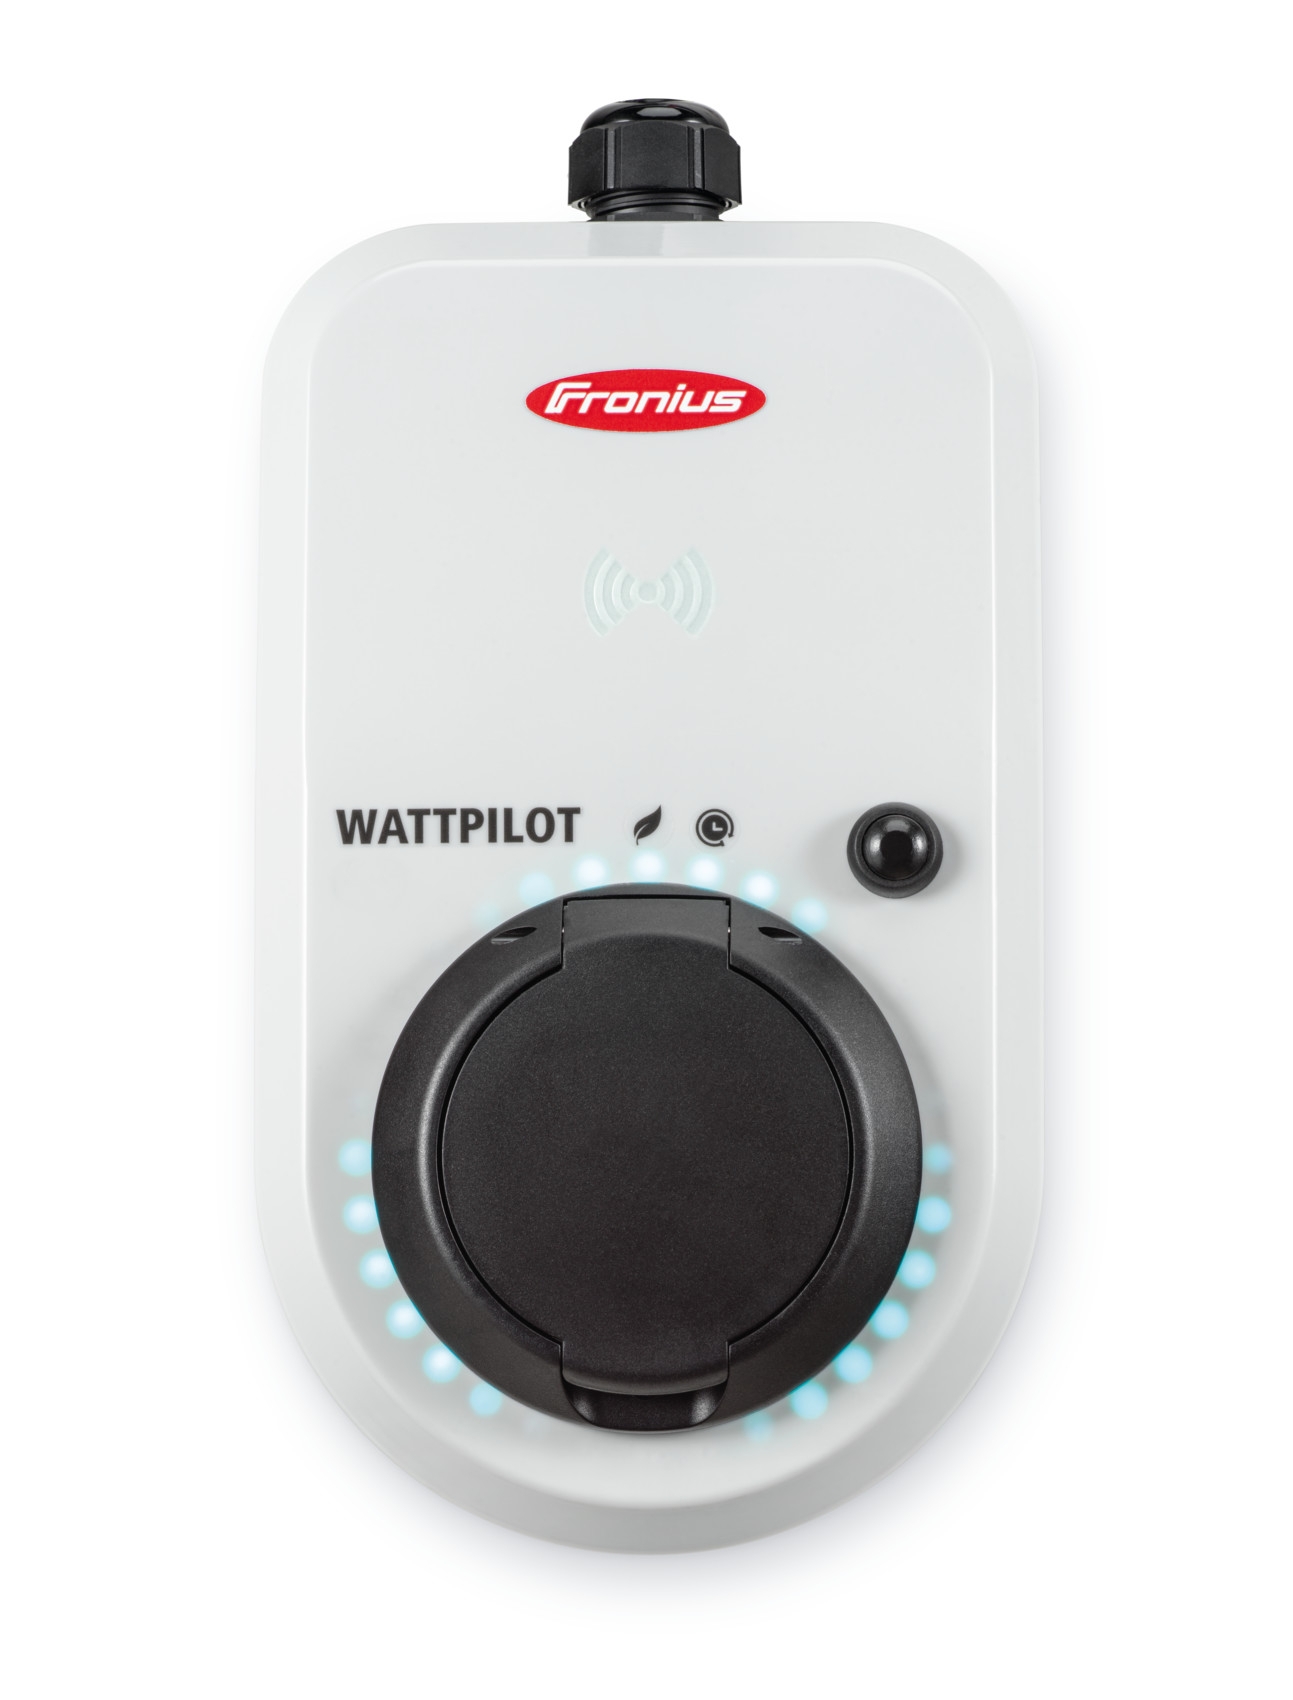 Fronius Wallbox Wattpilot Home 11 J 2.0